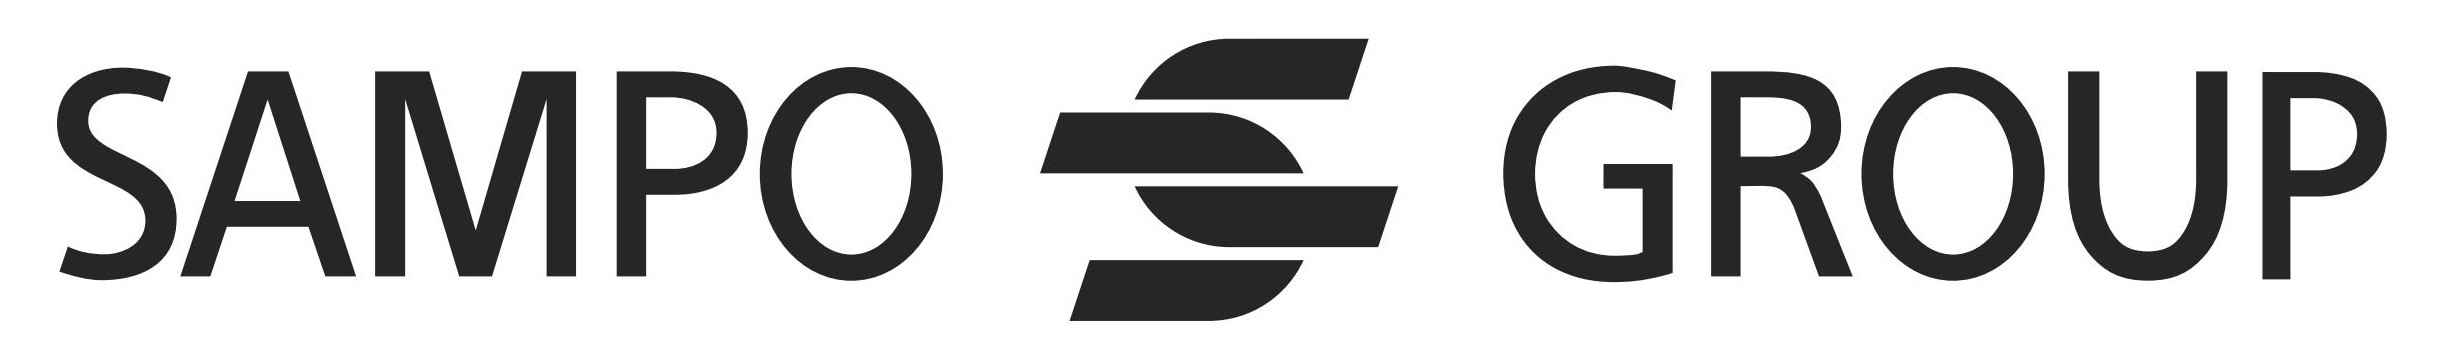 Sampo Group Logo [EPS File] png